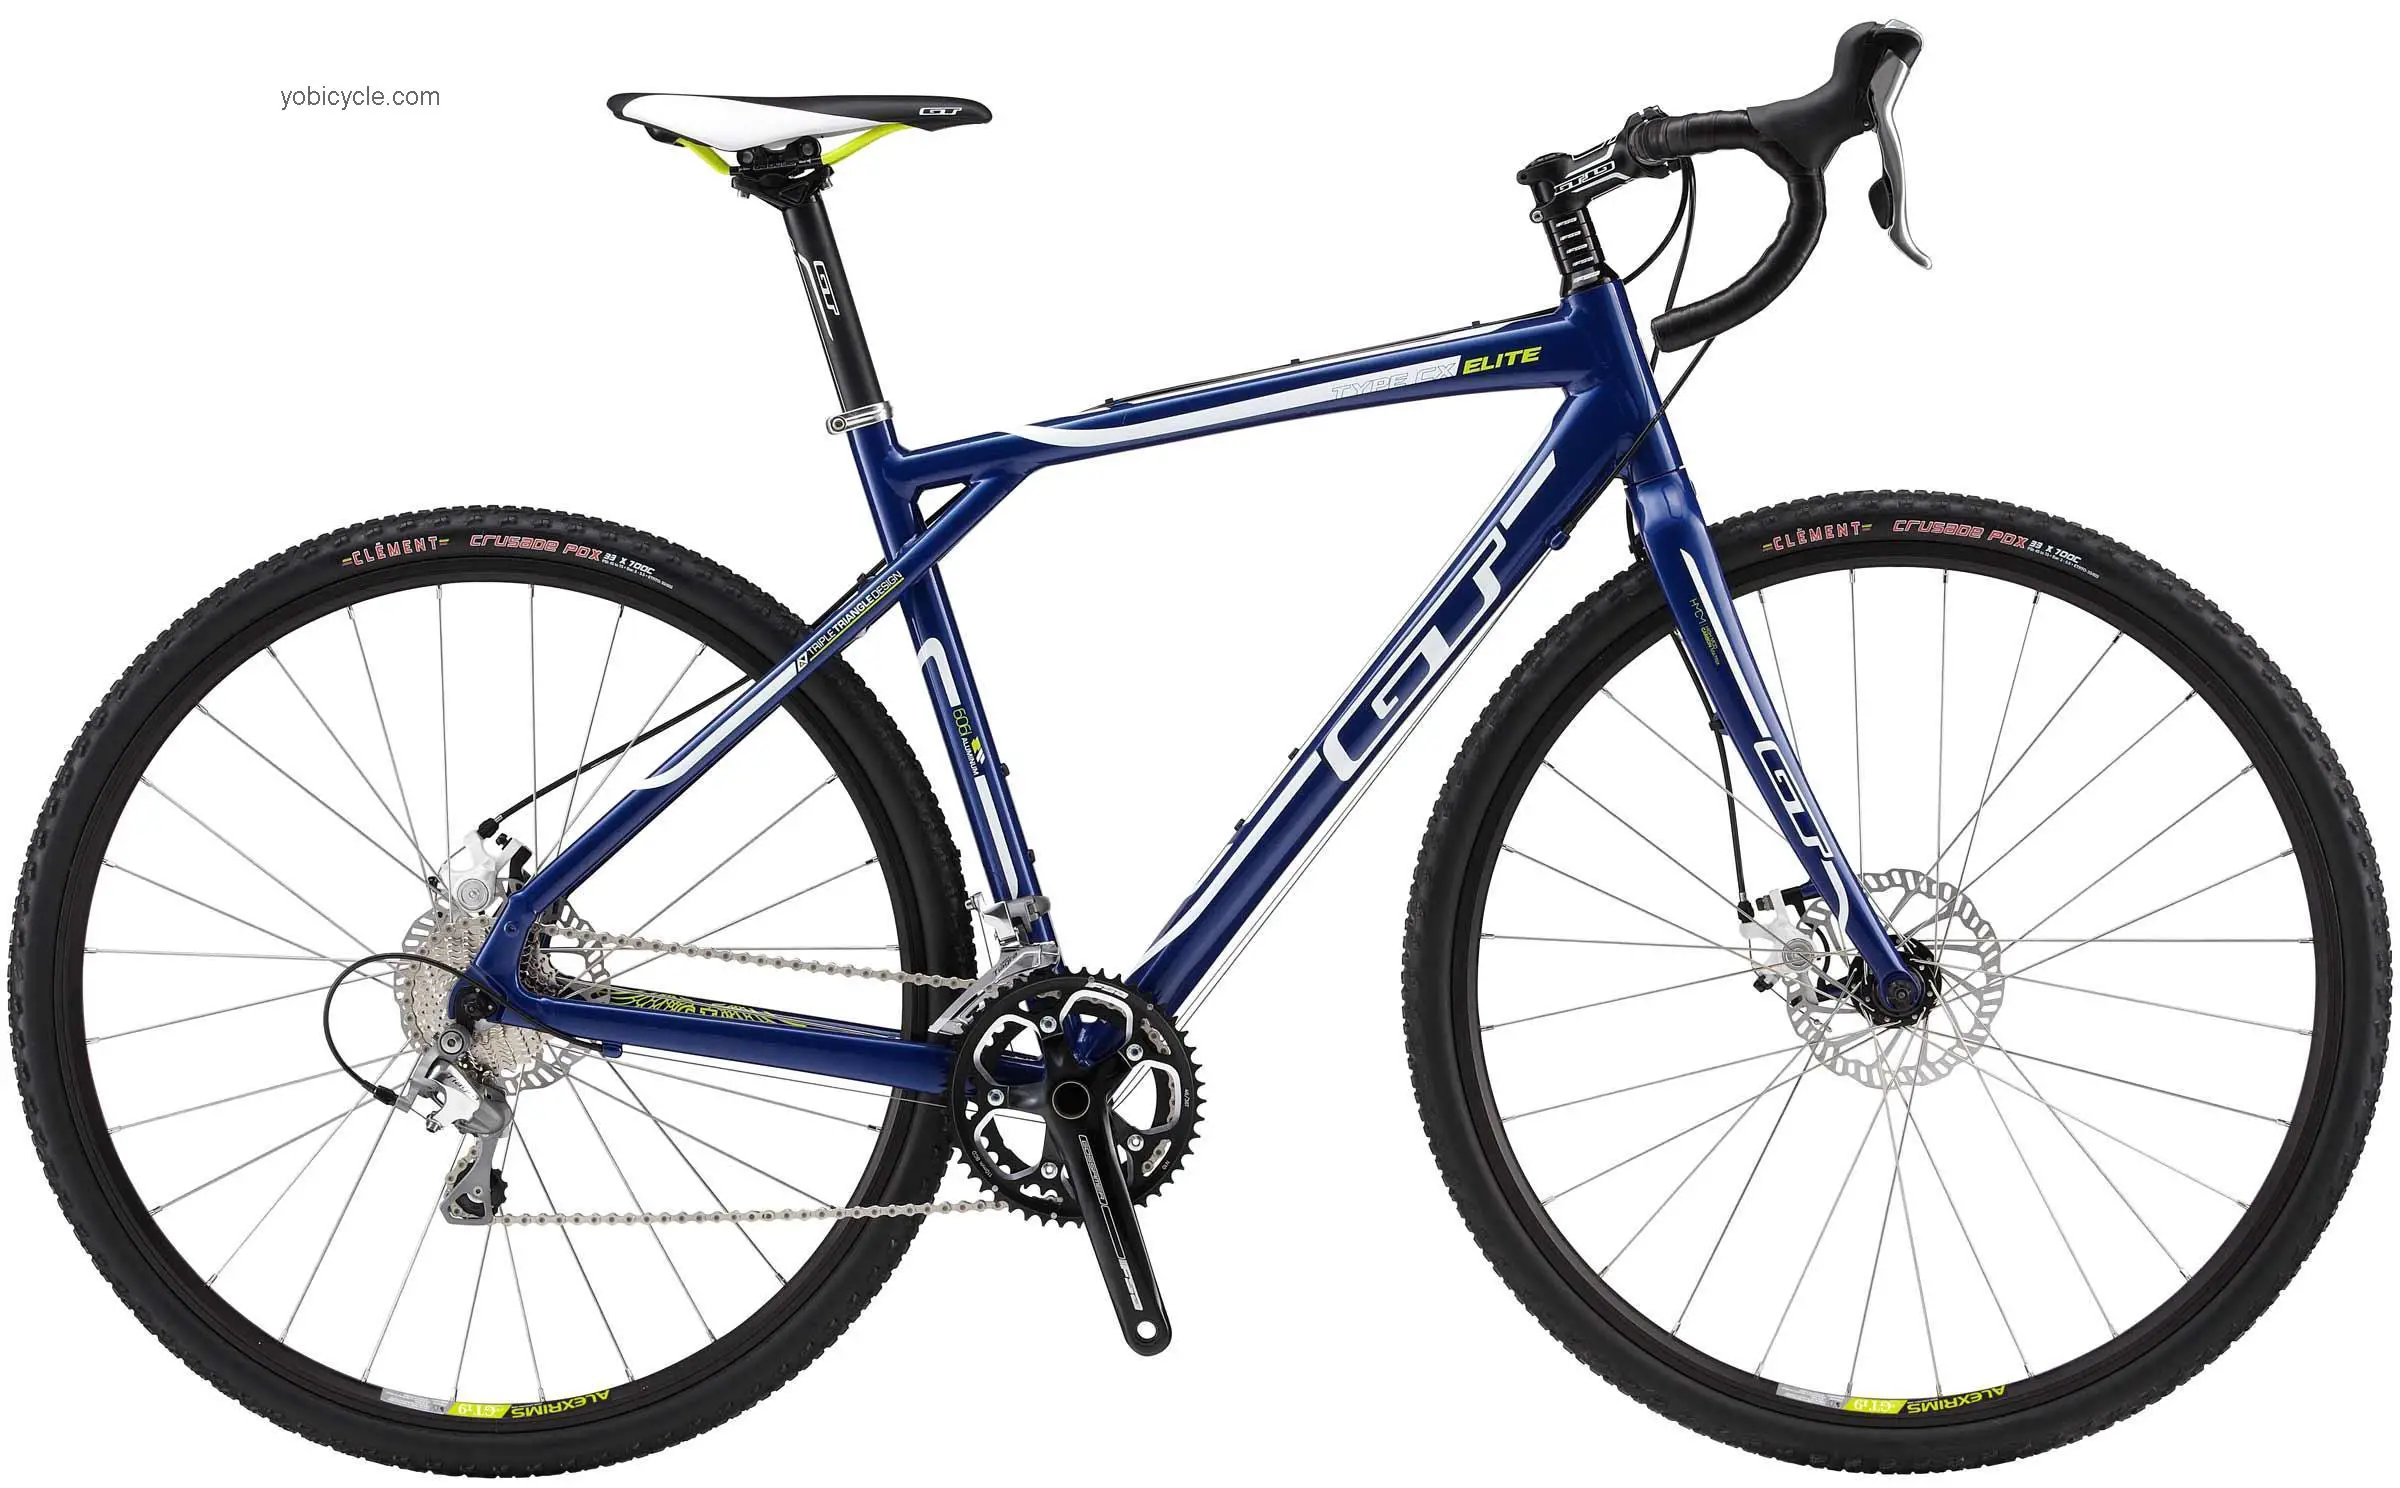 GT Bicycles GTR CX Elite 2013 comparison online with competitors